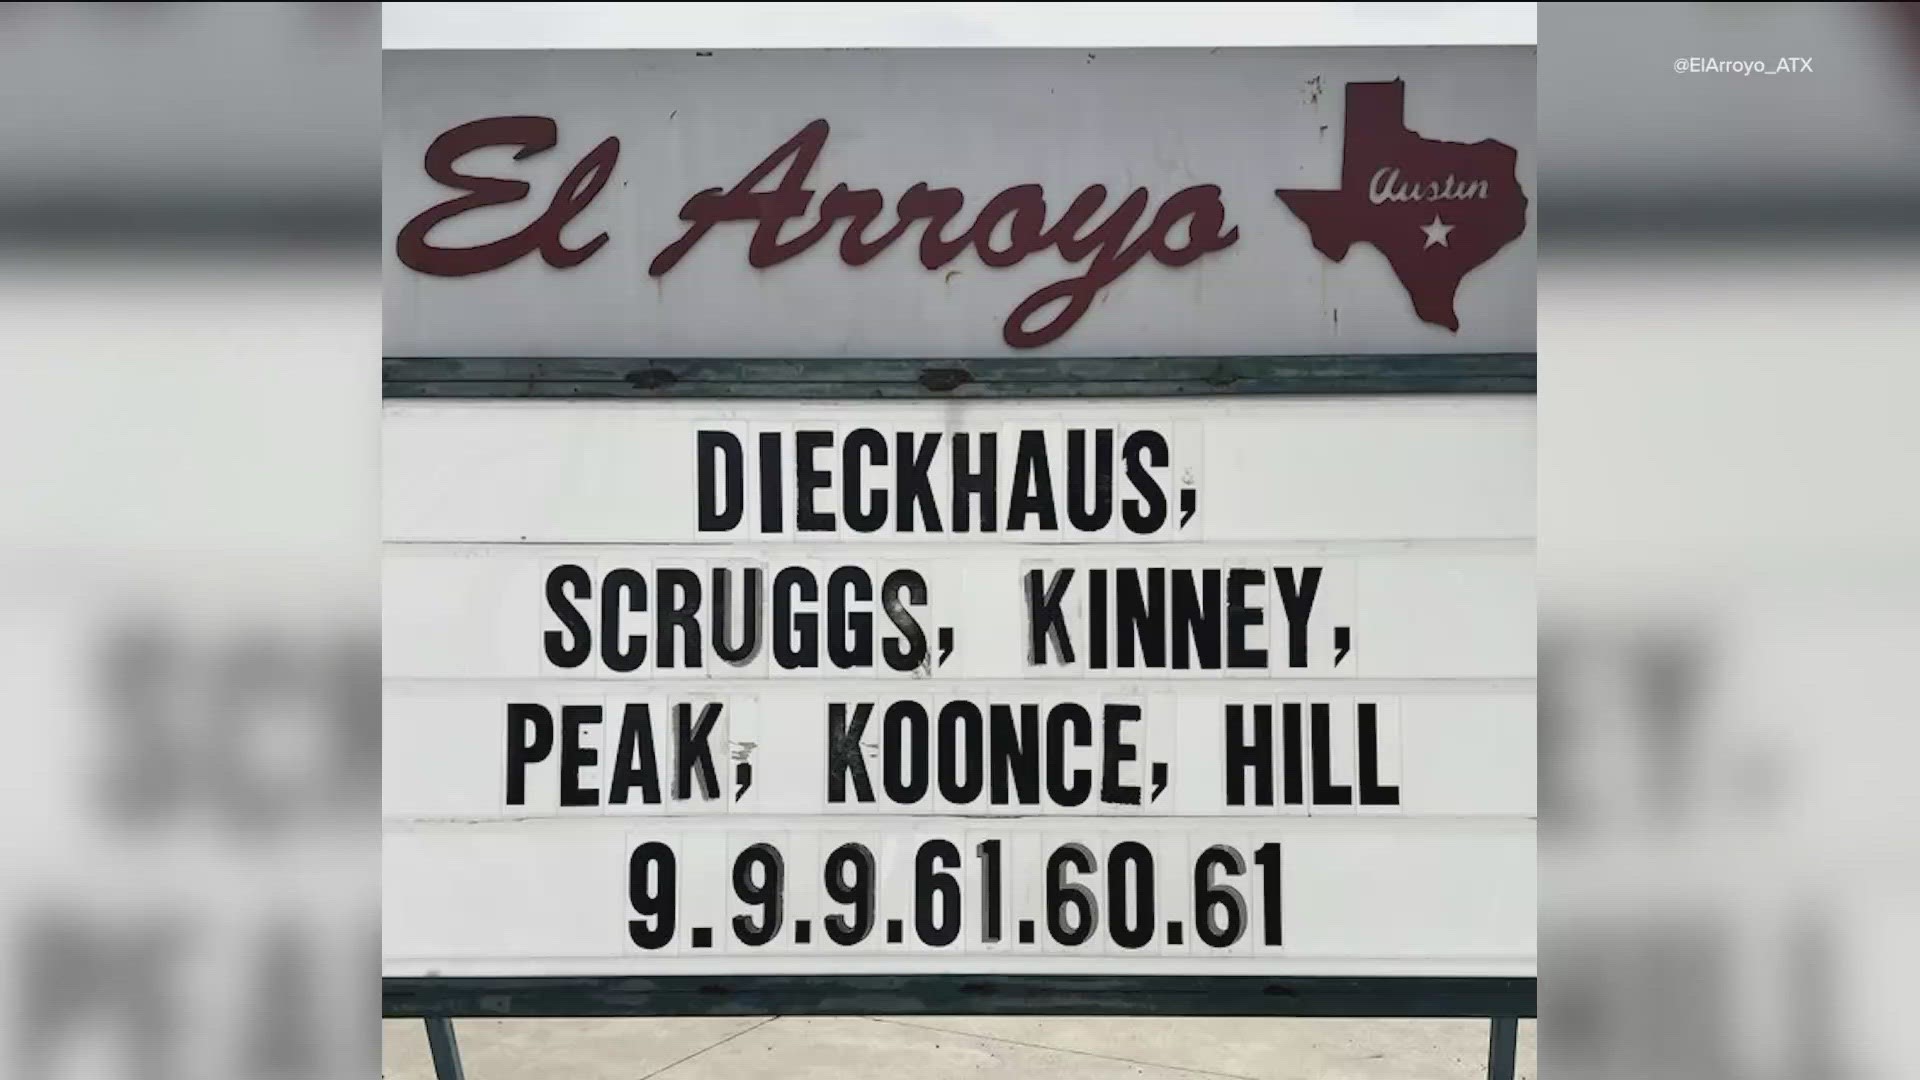 "Dieckhaus, Scruggs, Kinney, Peak, Koonce, Hill. 9.9.9.61.60.61," was written on the restaurant's marquee.